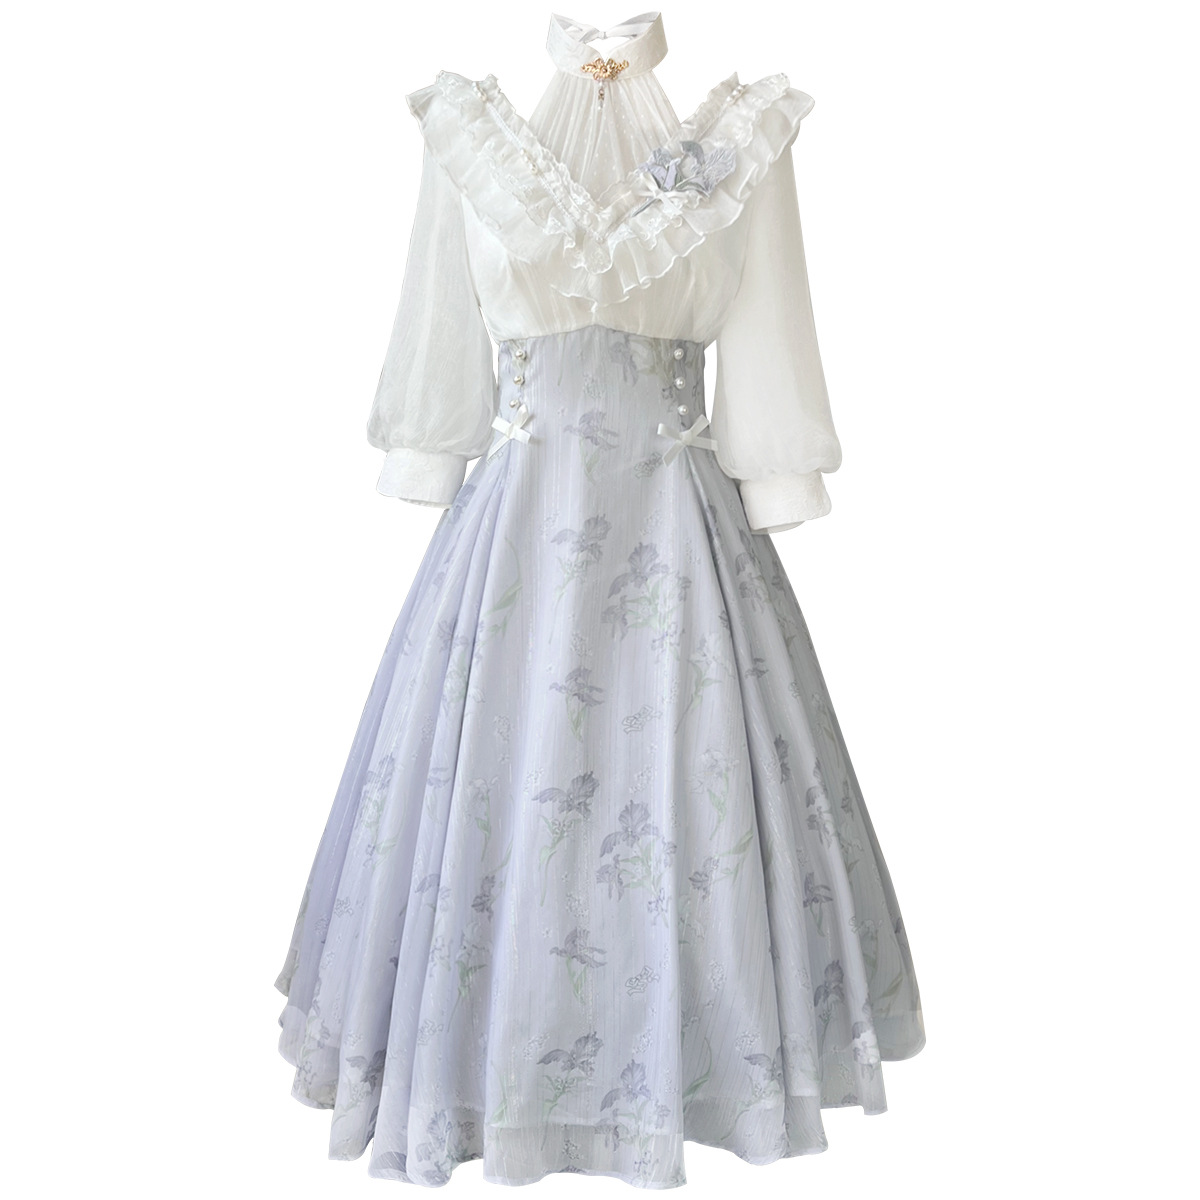 Original Design Iris Tectorum Dream Op Lolita Daily Cute Lolita Sweet Skirt 6735